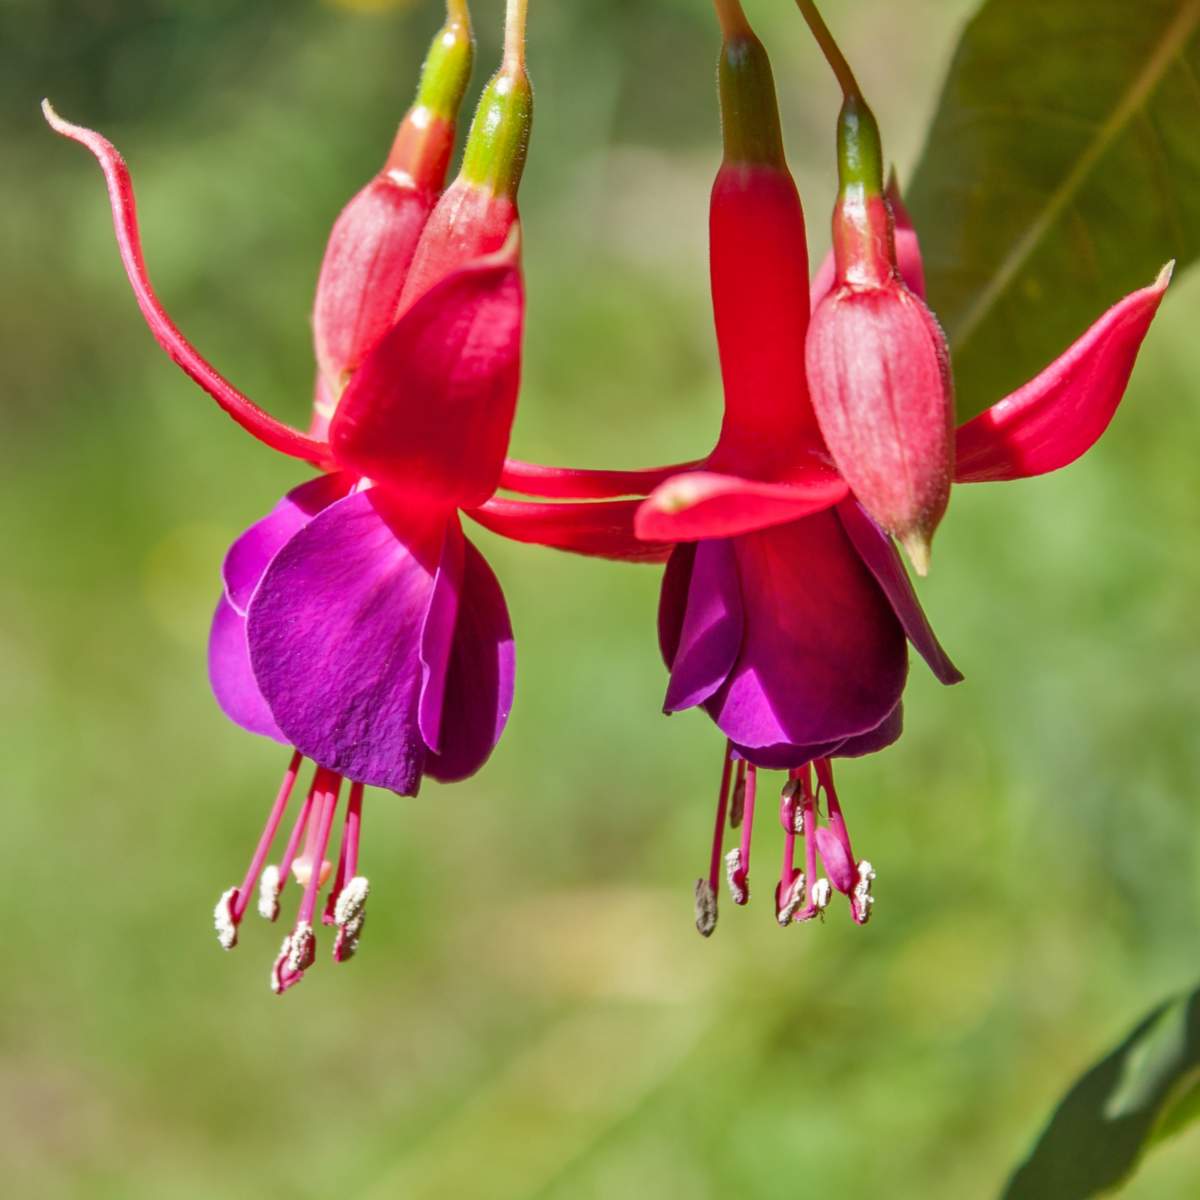 Fuschia plant flowers